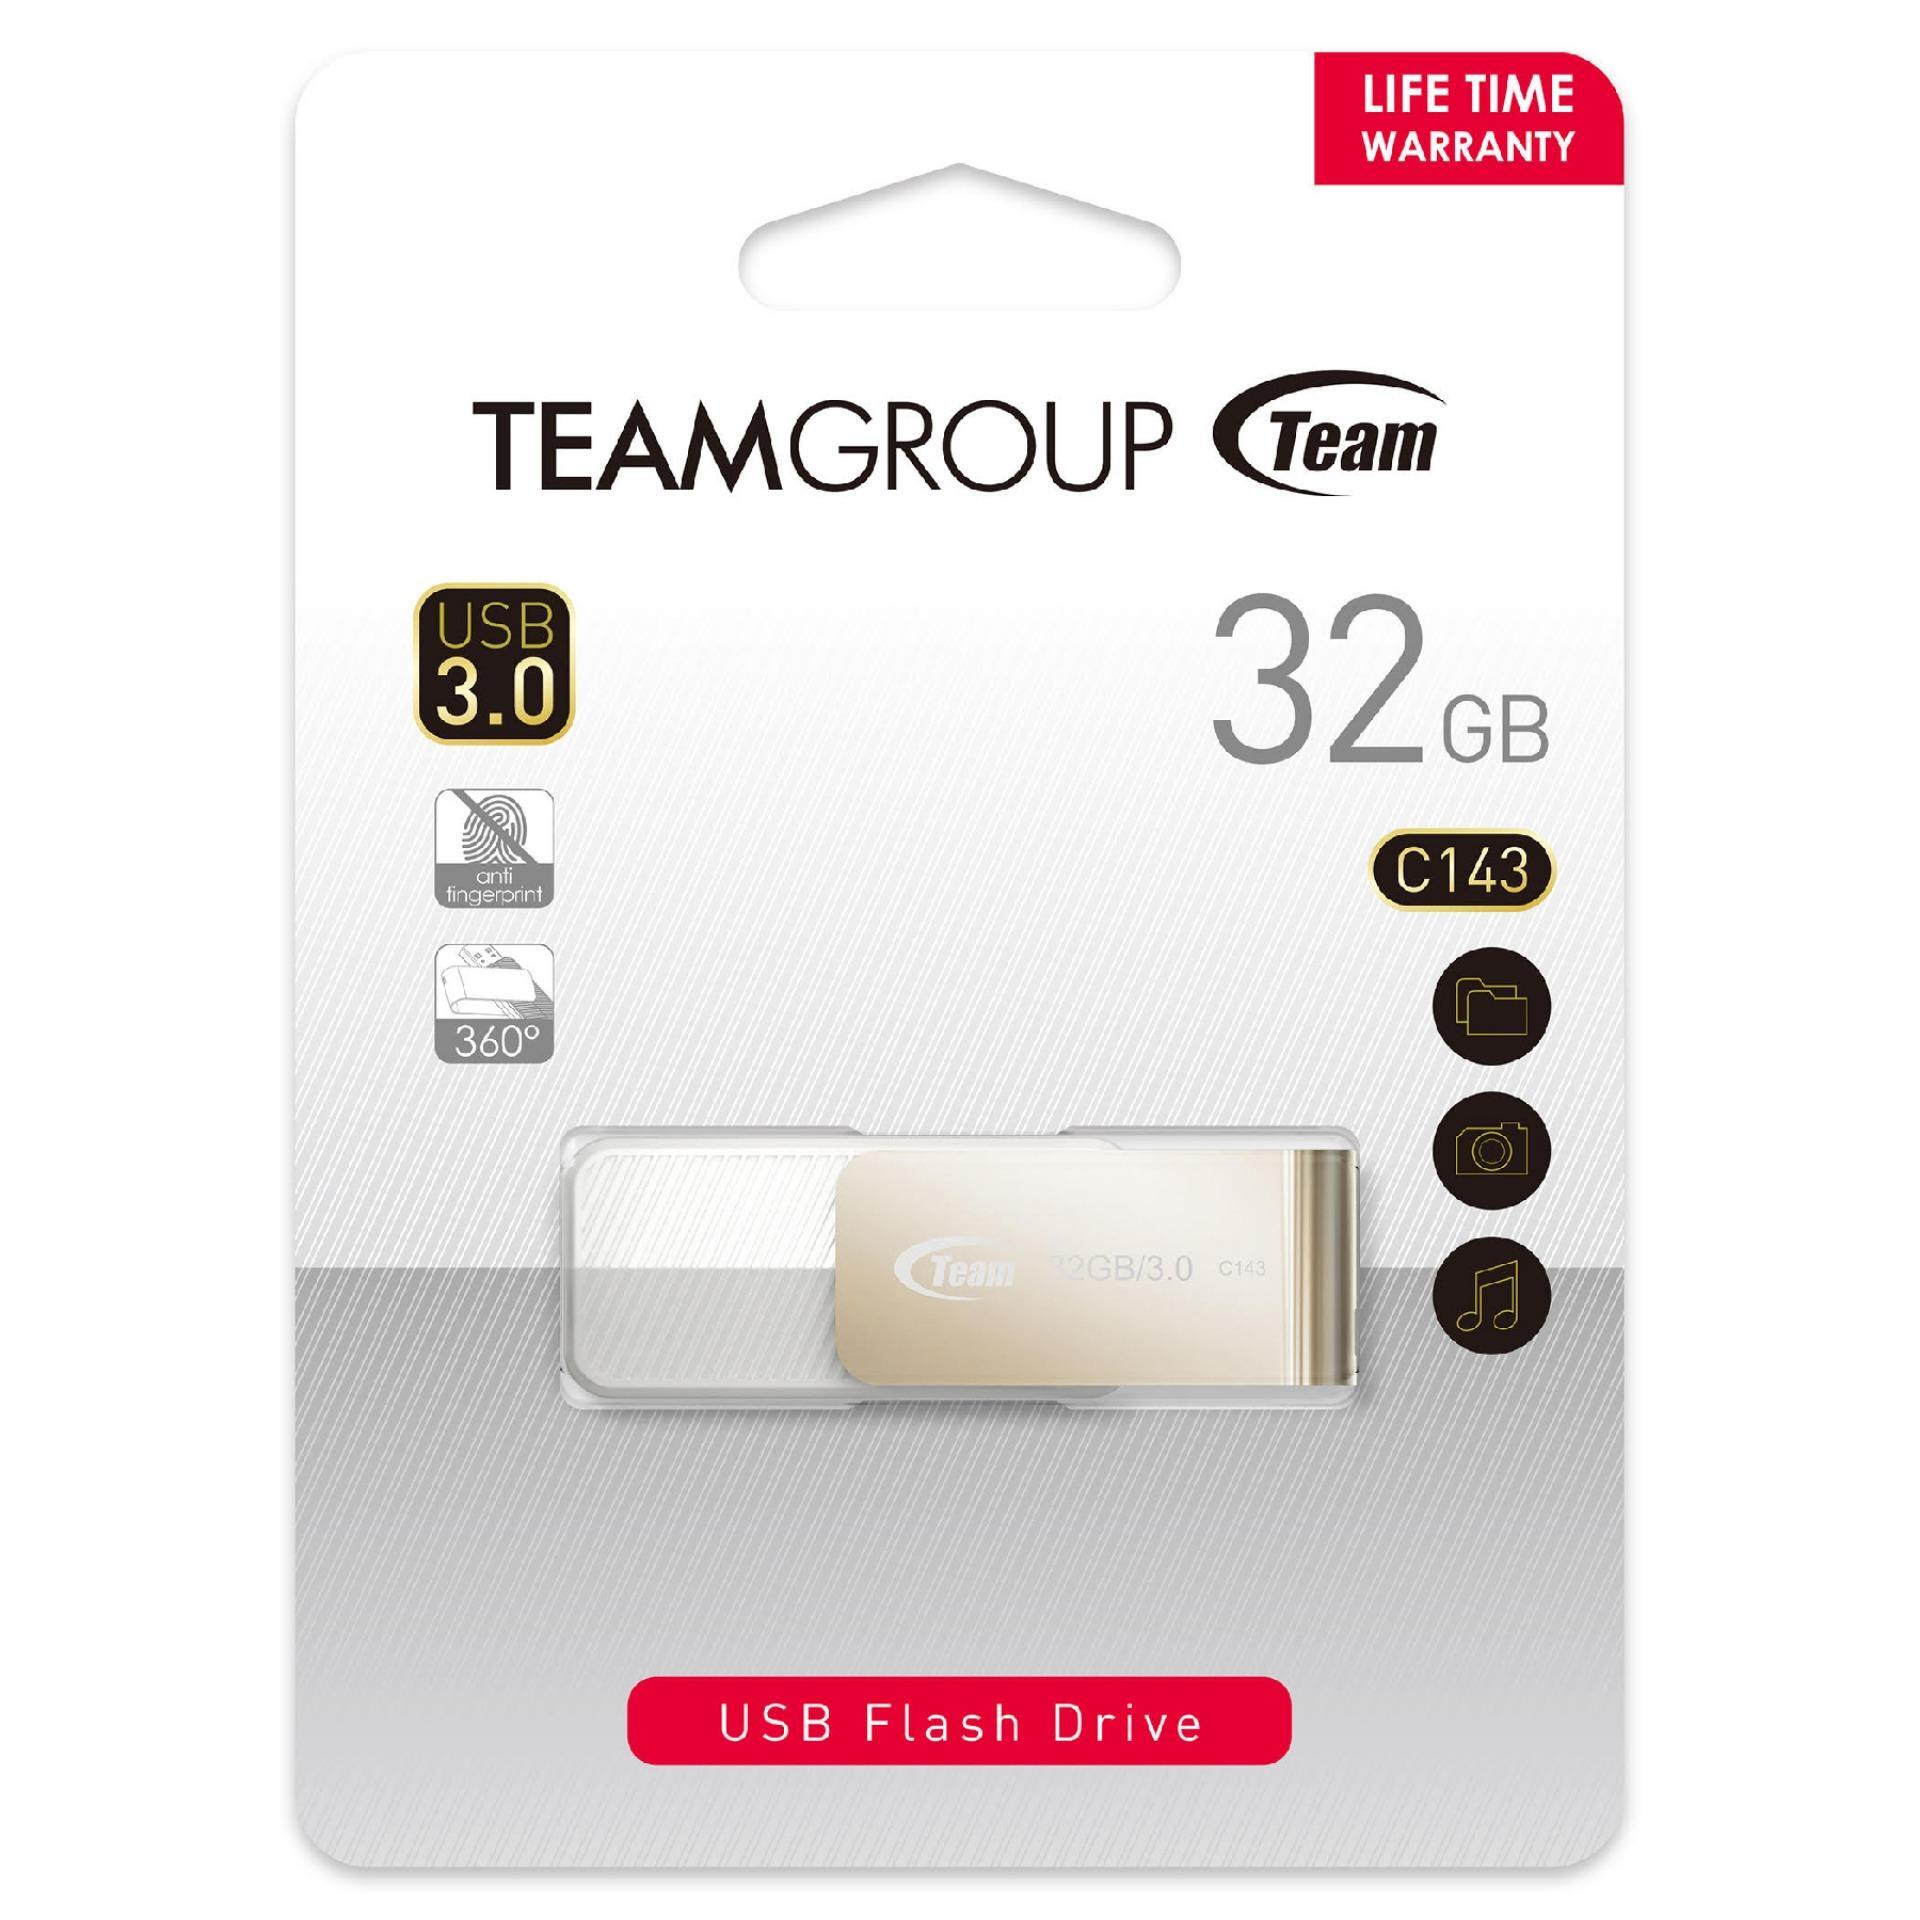 USB Team Group C143 32GB 3.0